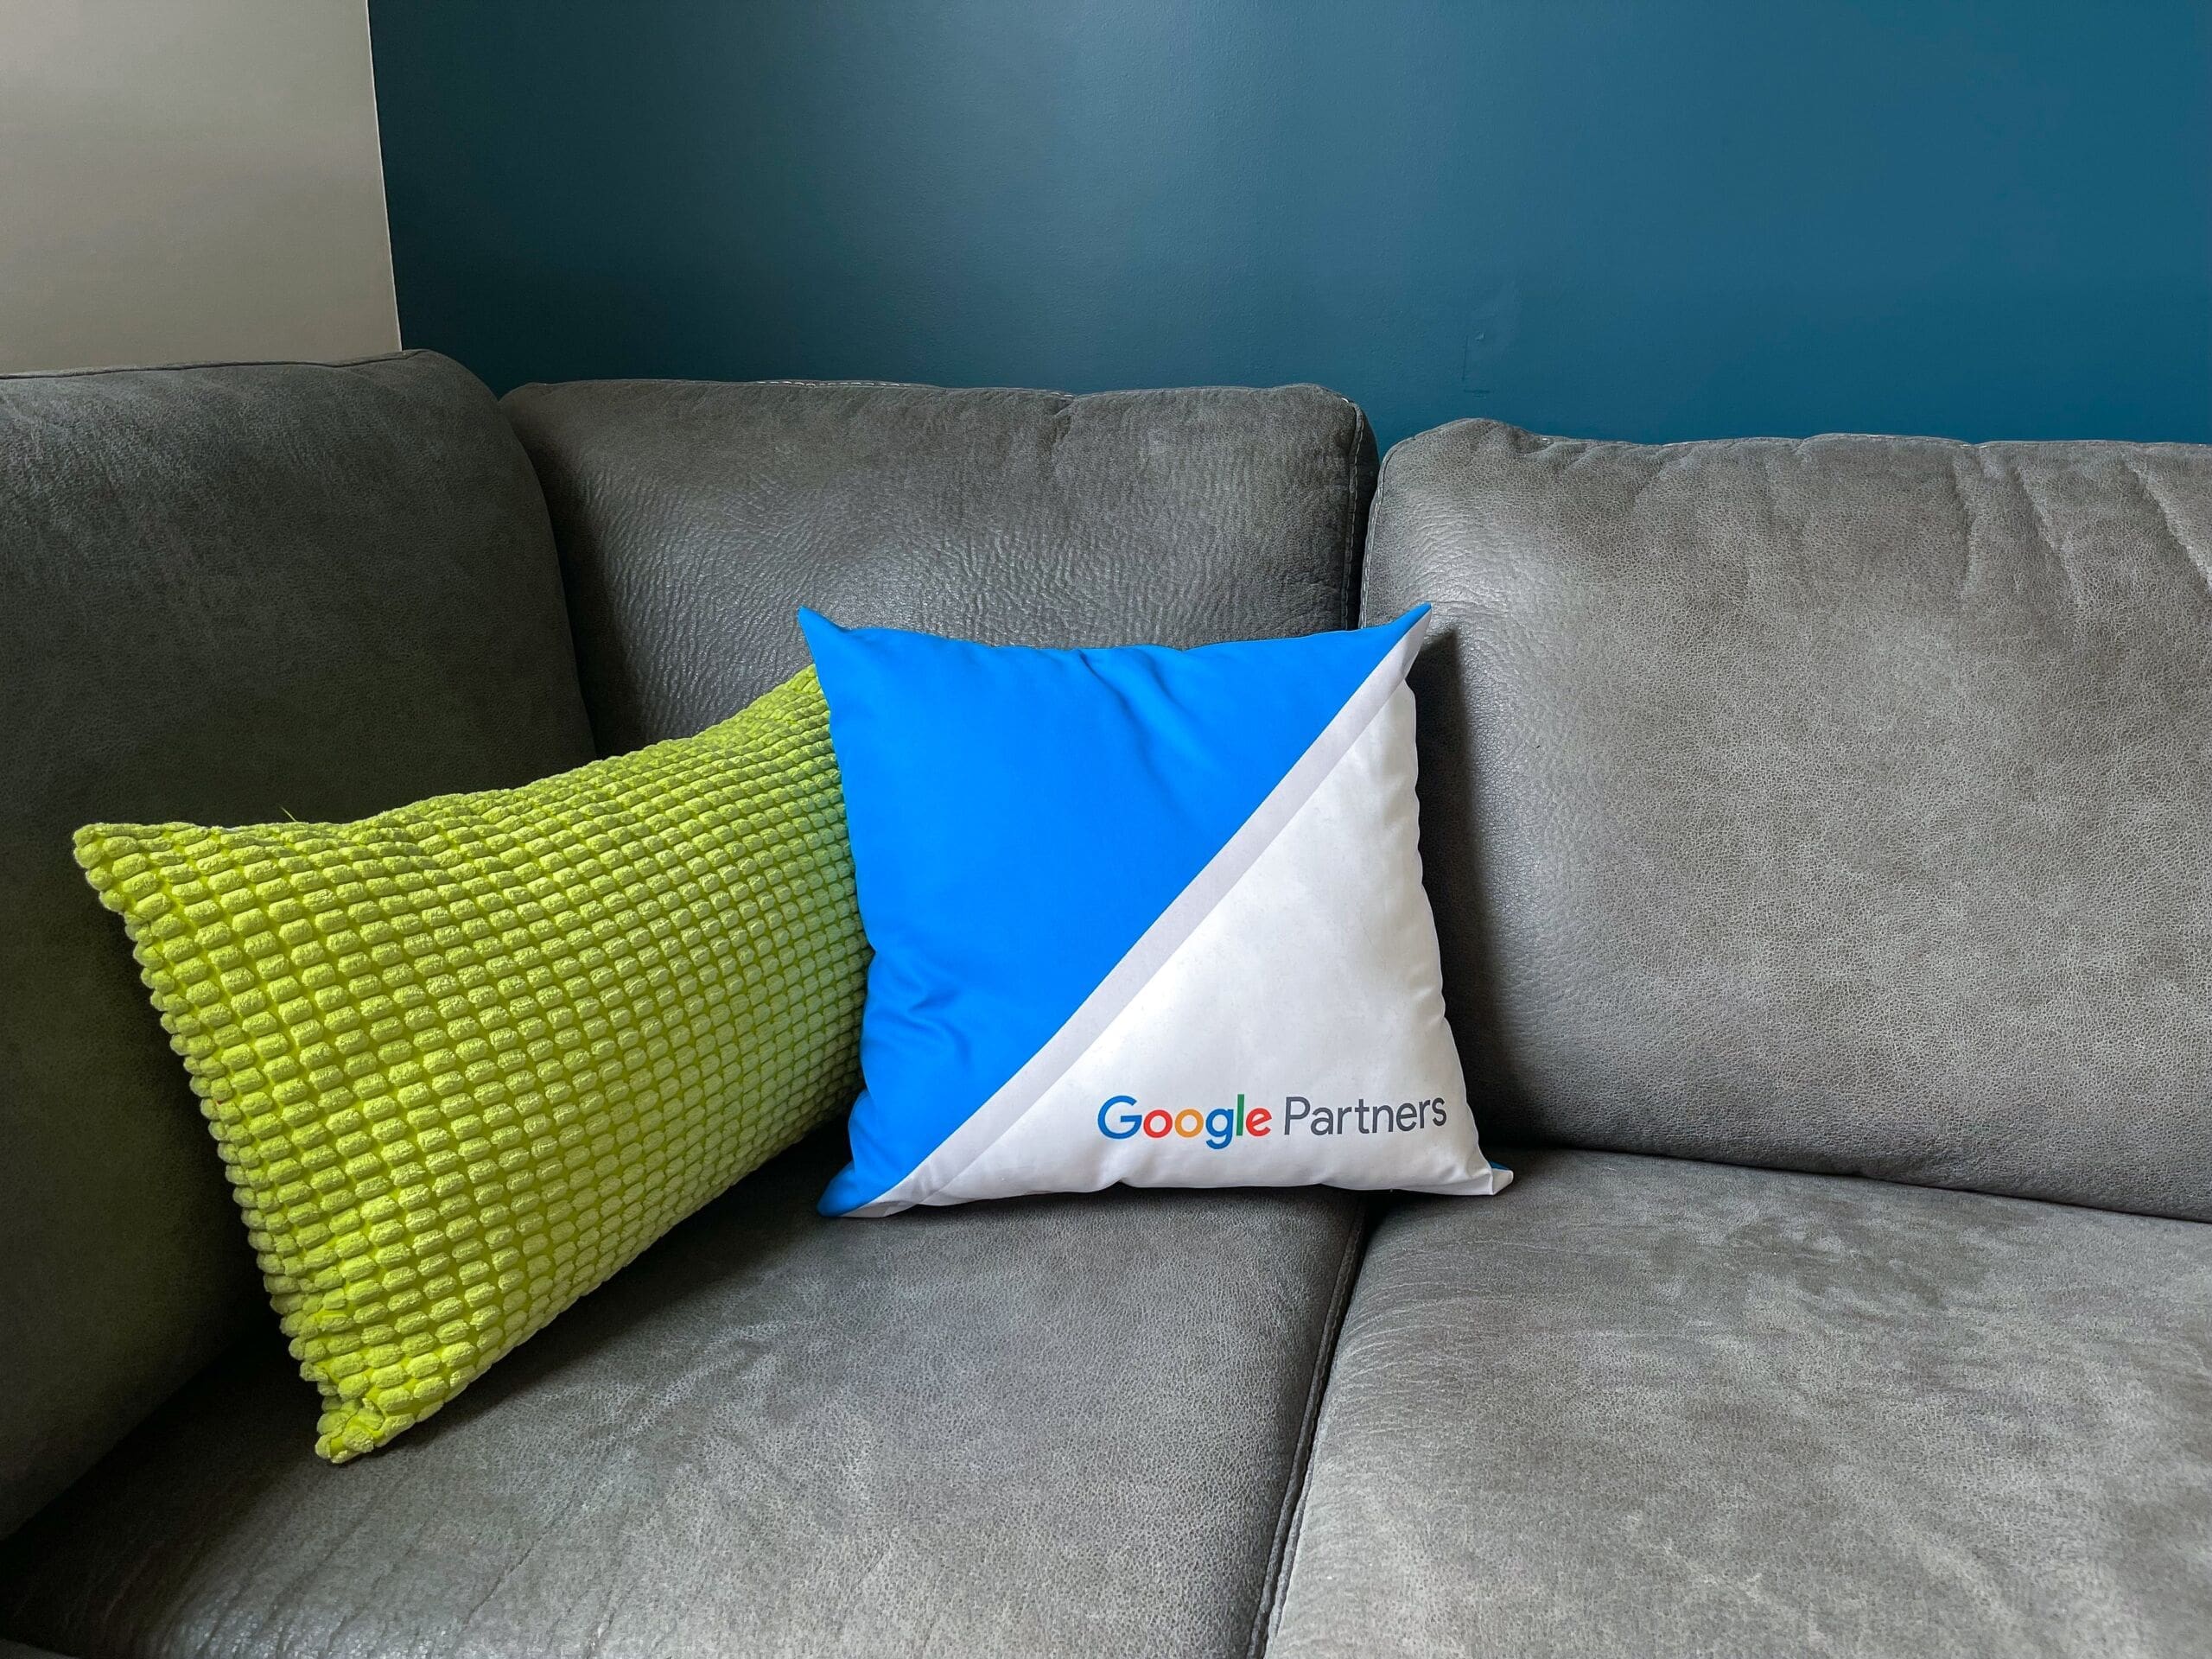 google partners pillow on sofa